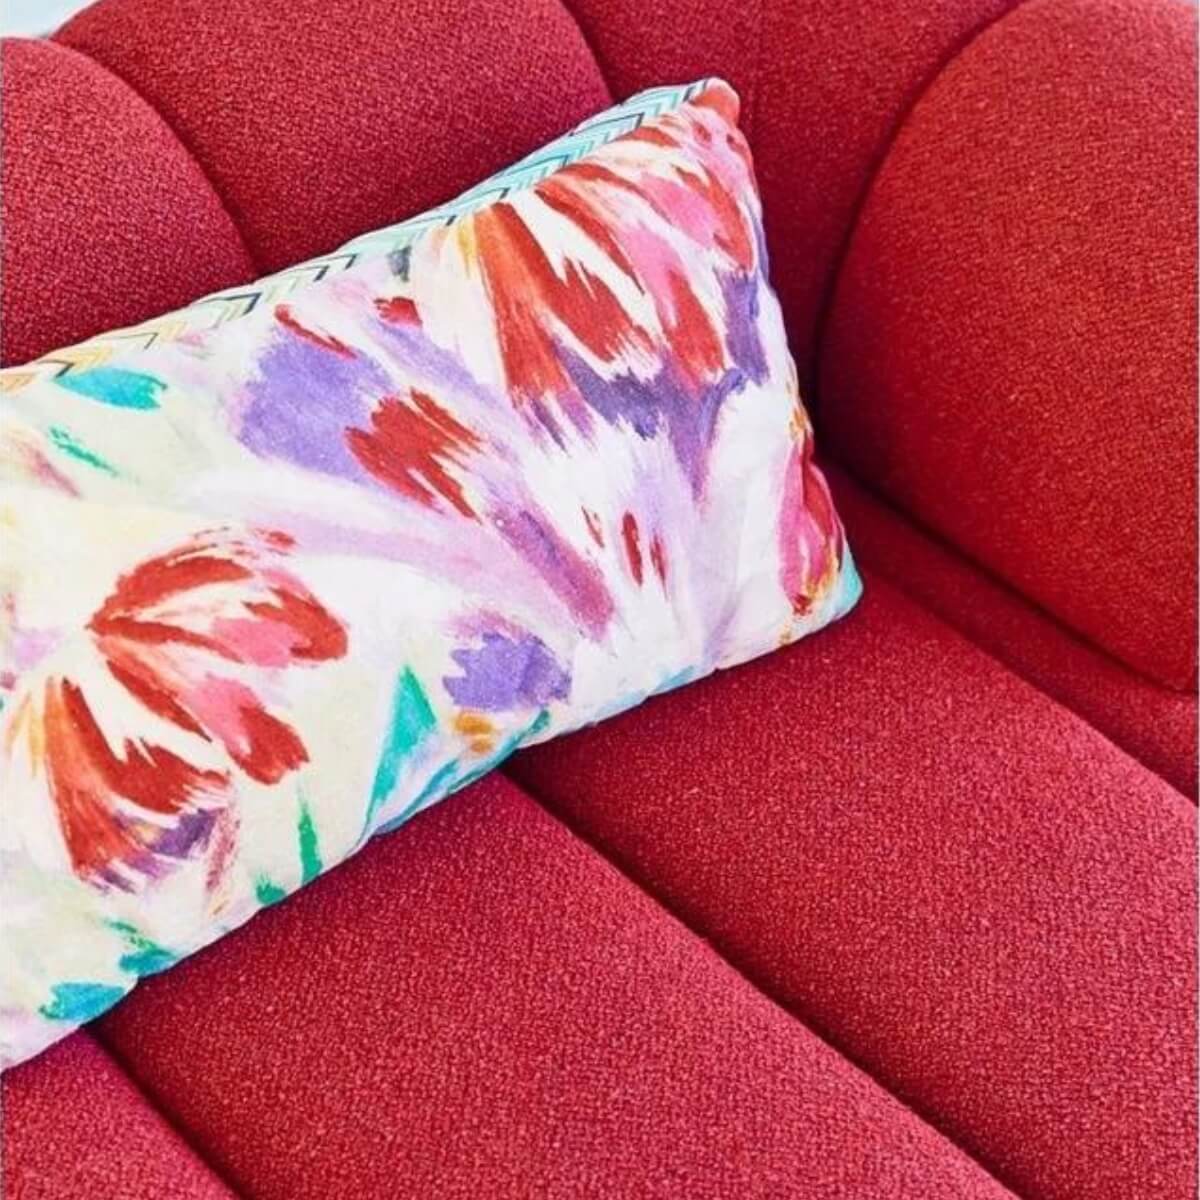 Blossom Fabric Sofa for Living Room in Australia 1